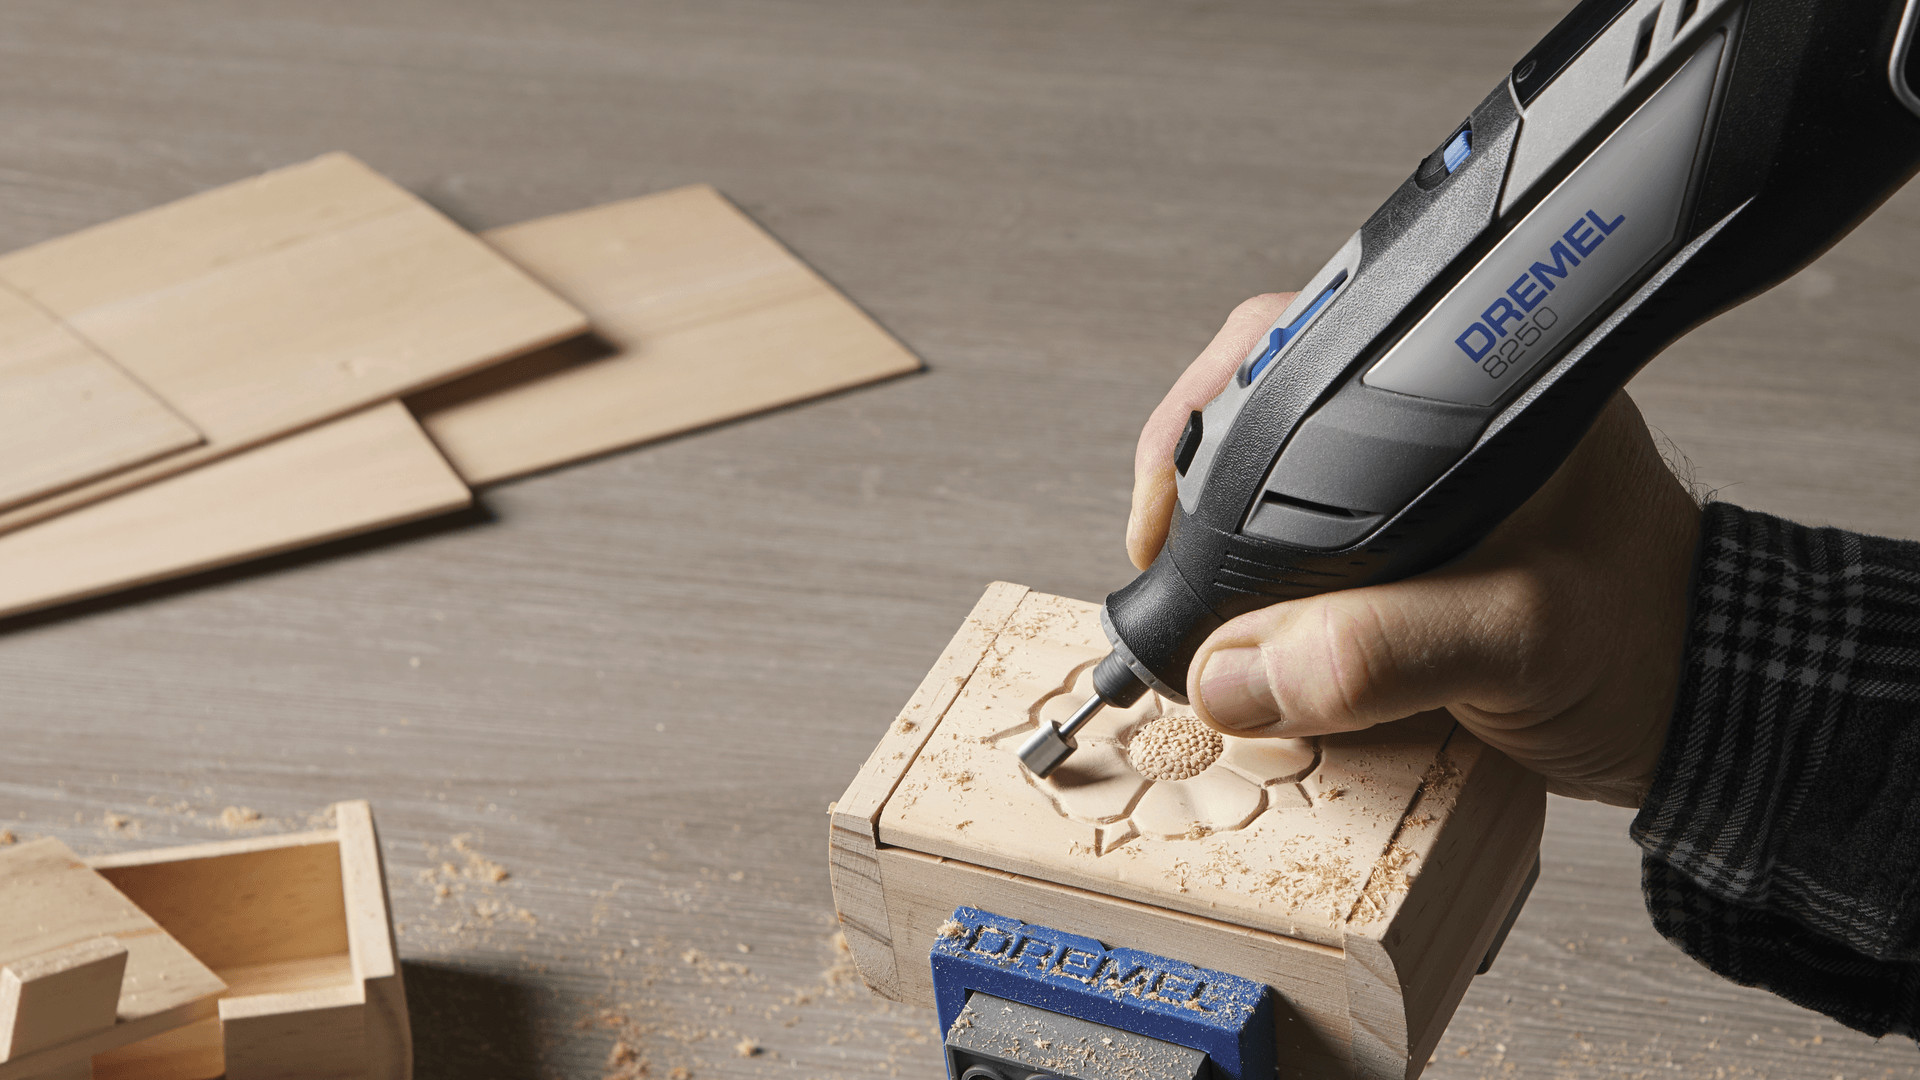 Buy Dremel Wood Carving Bits online